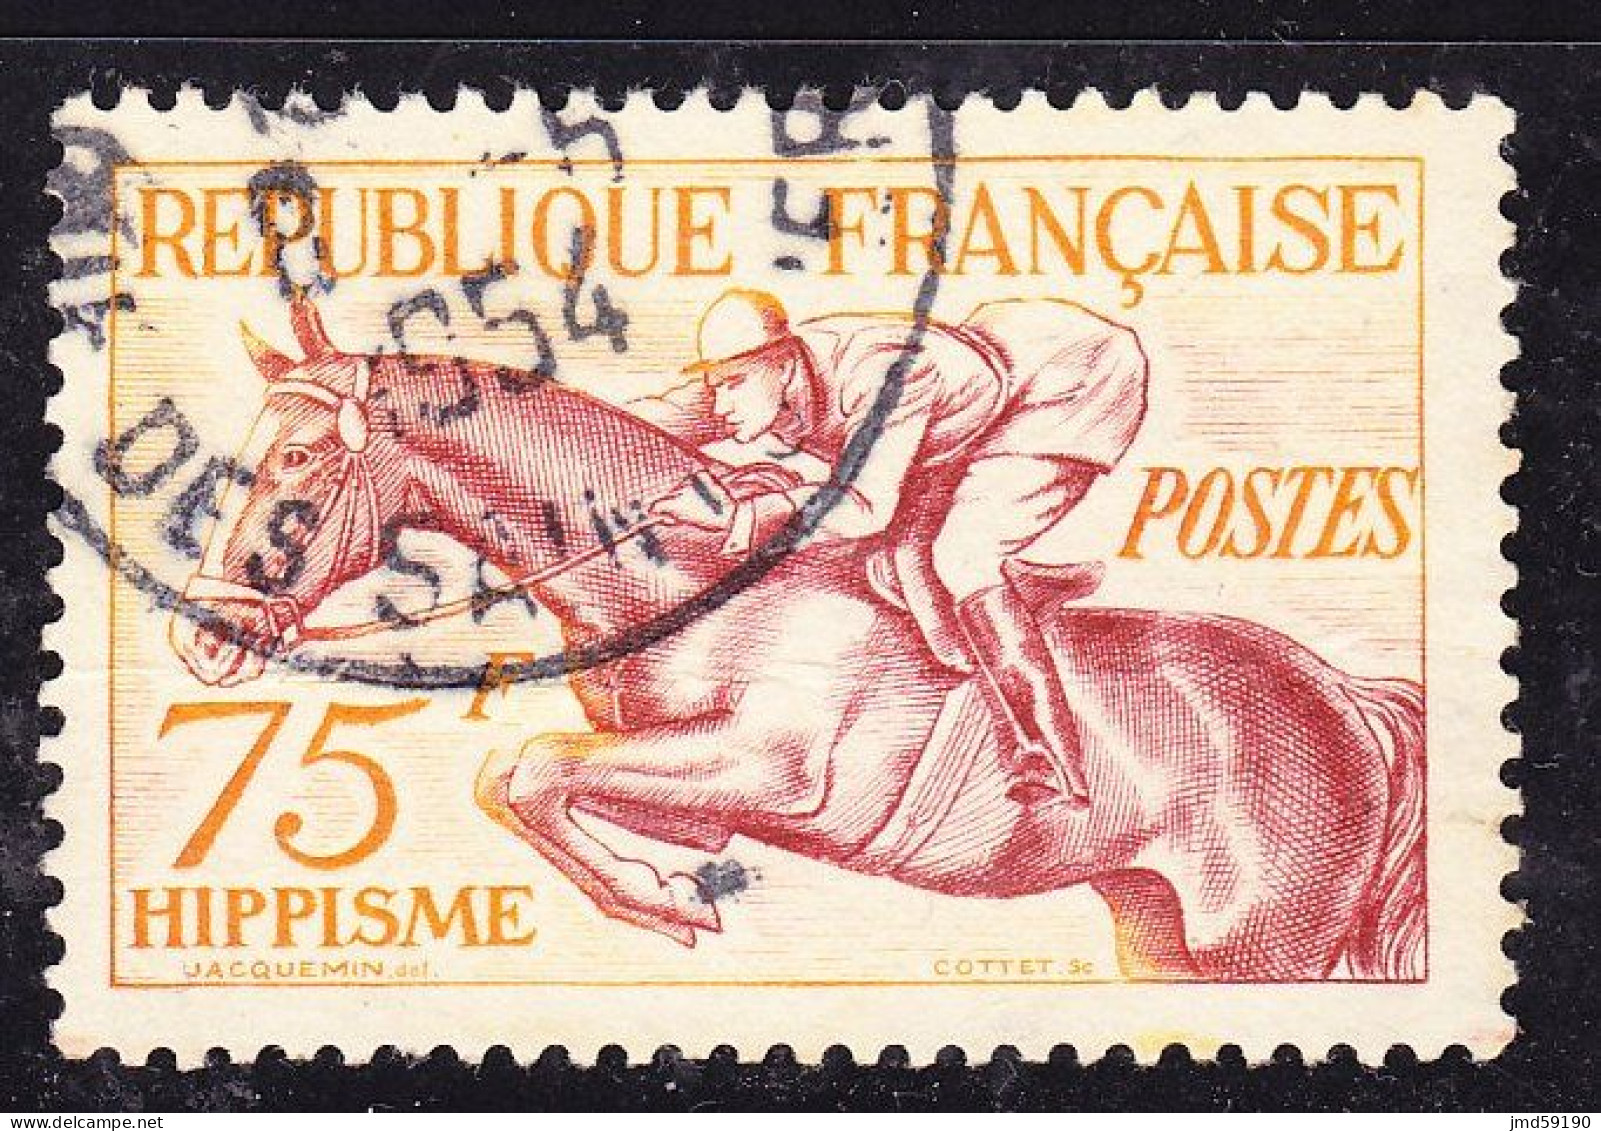 FRANCE Timbre Oblitéré N° 965 - Jeux Olympiques D'HELSINKI 1952 - 75Fr Hippisme - Usados